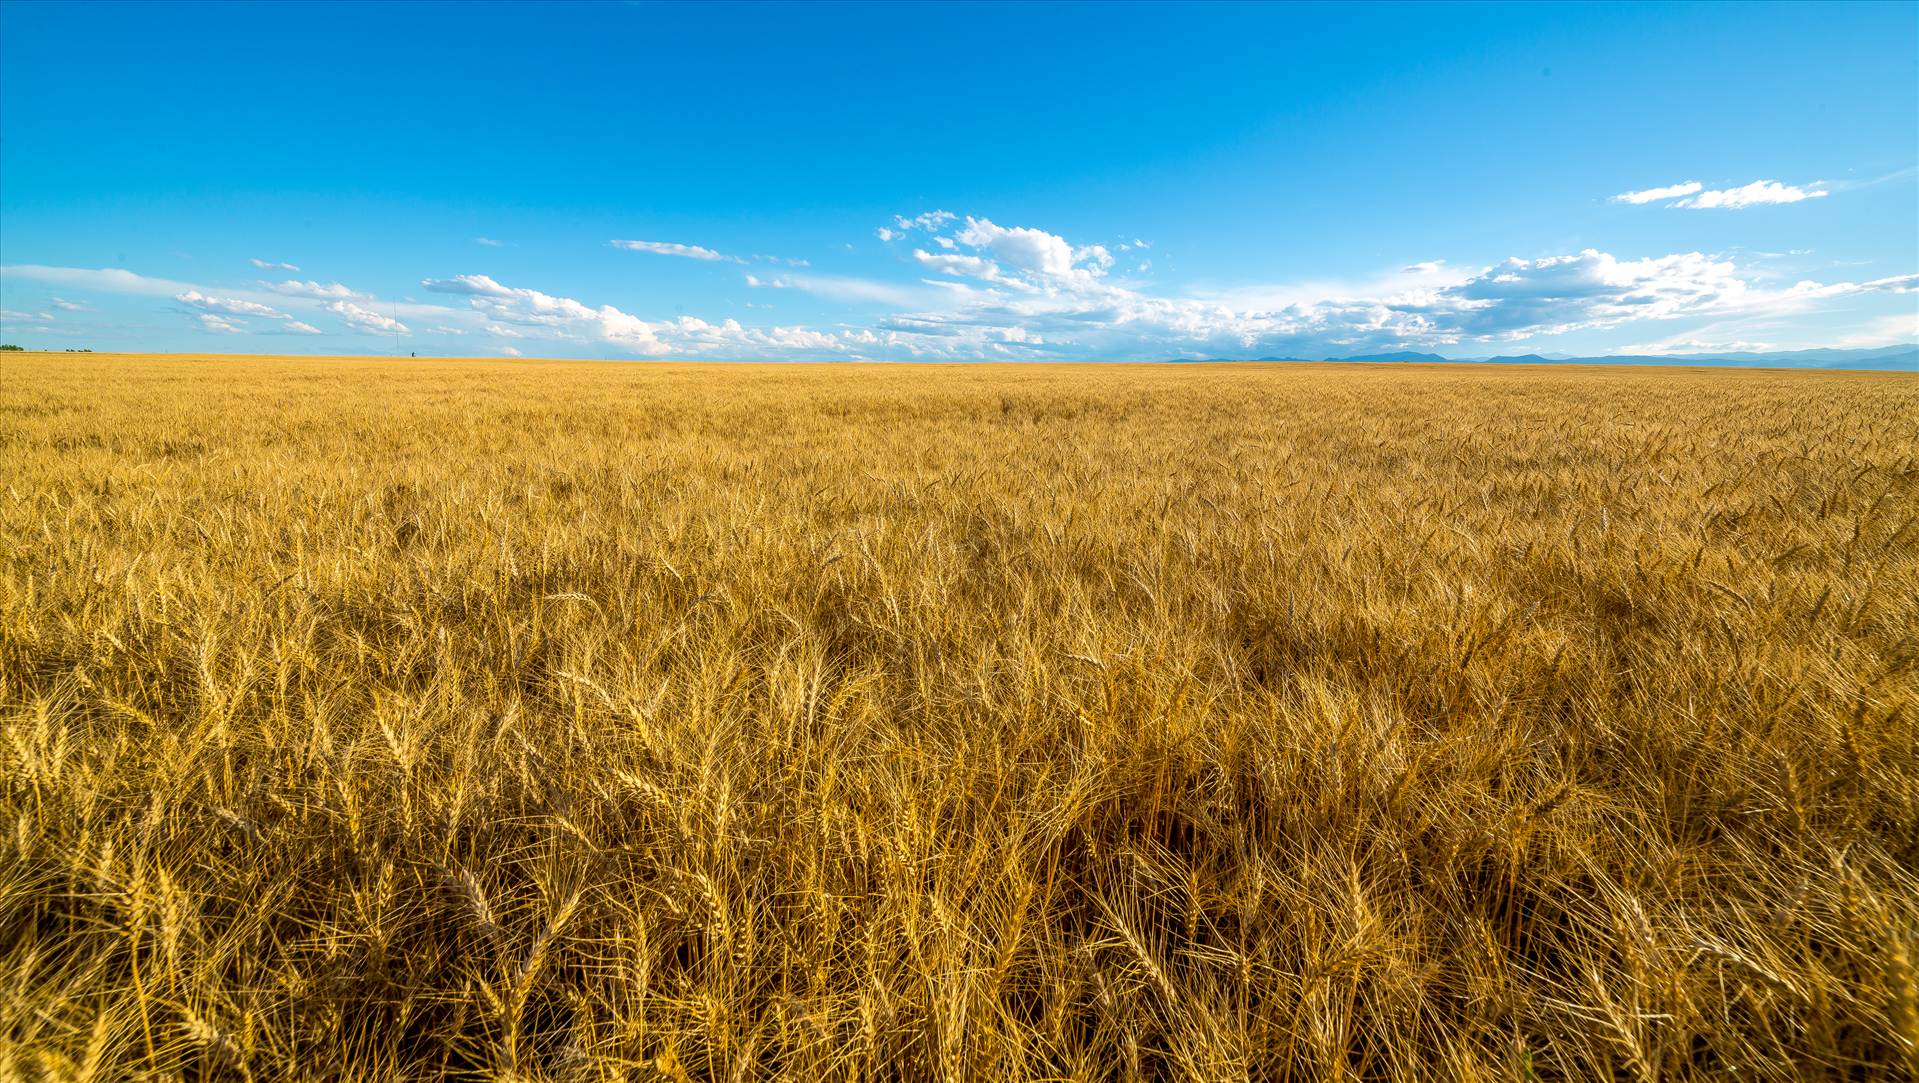 Wheat Field - A field of wheat in late summer near Longmont, Colorado. by Scott Smith Photos